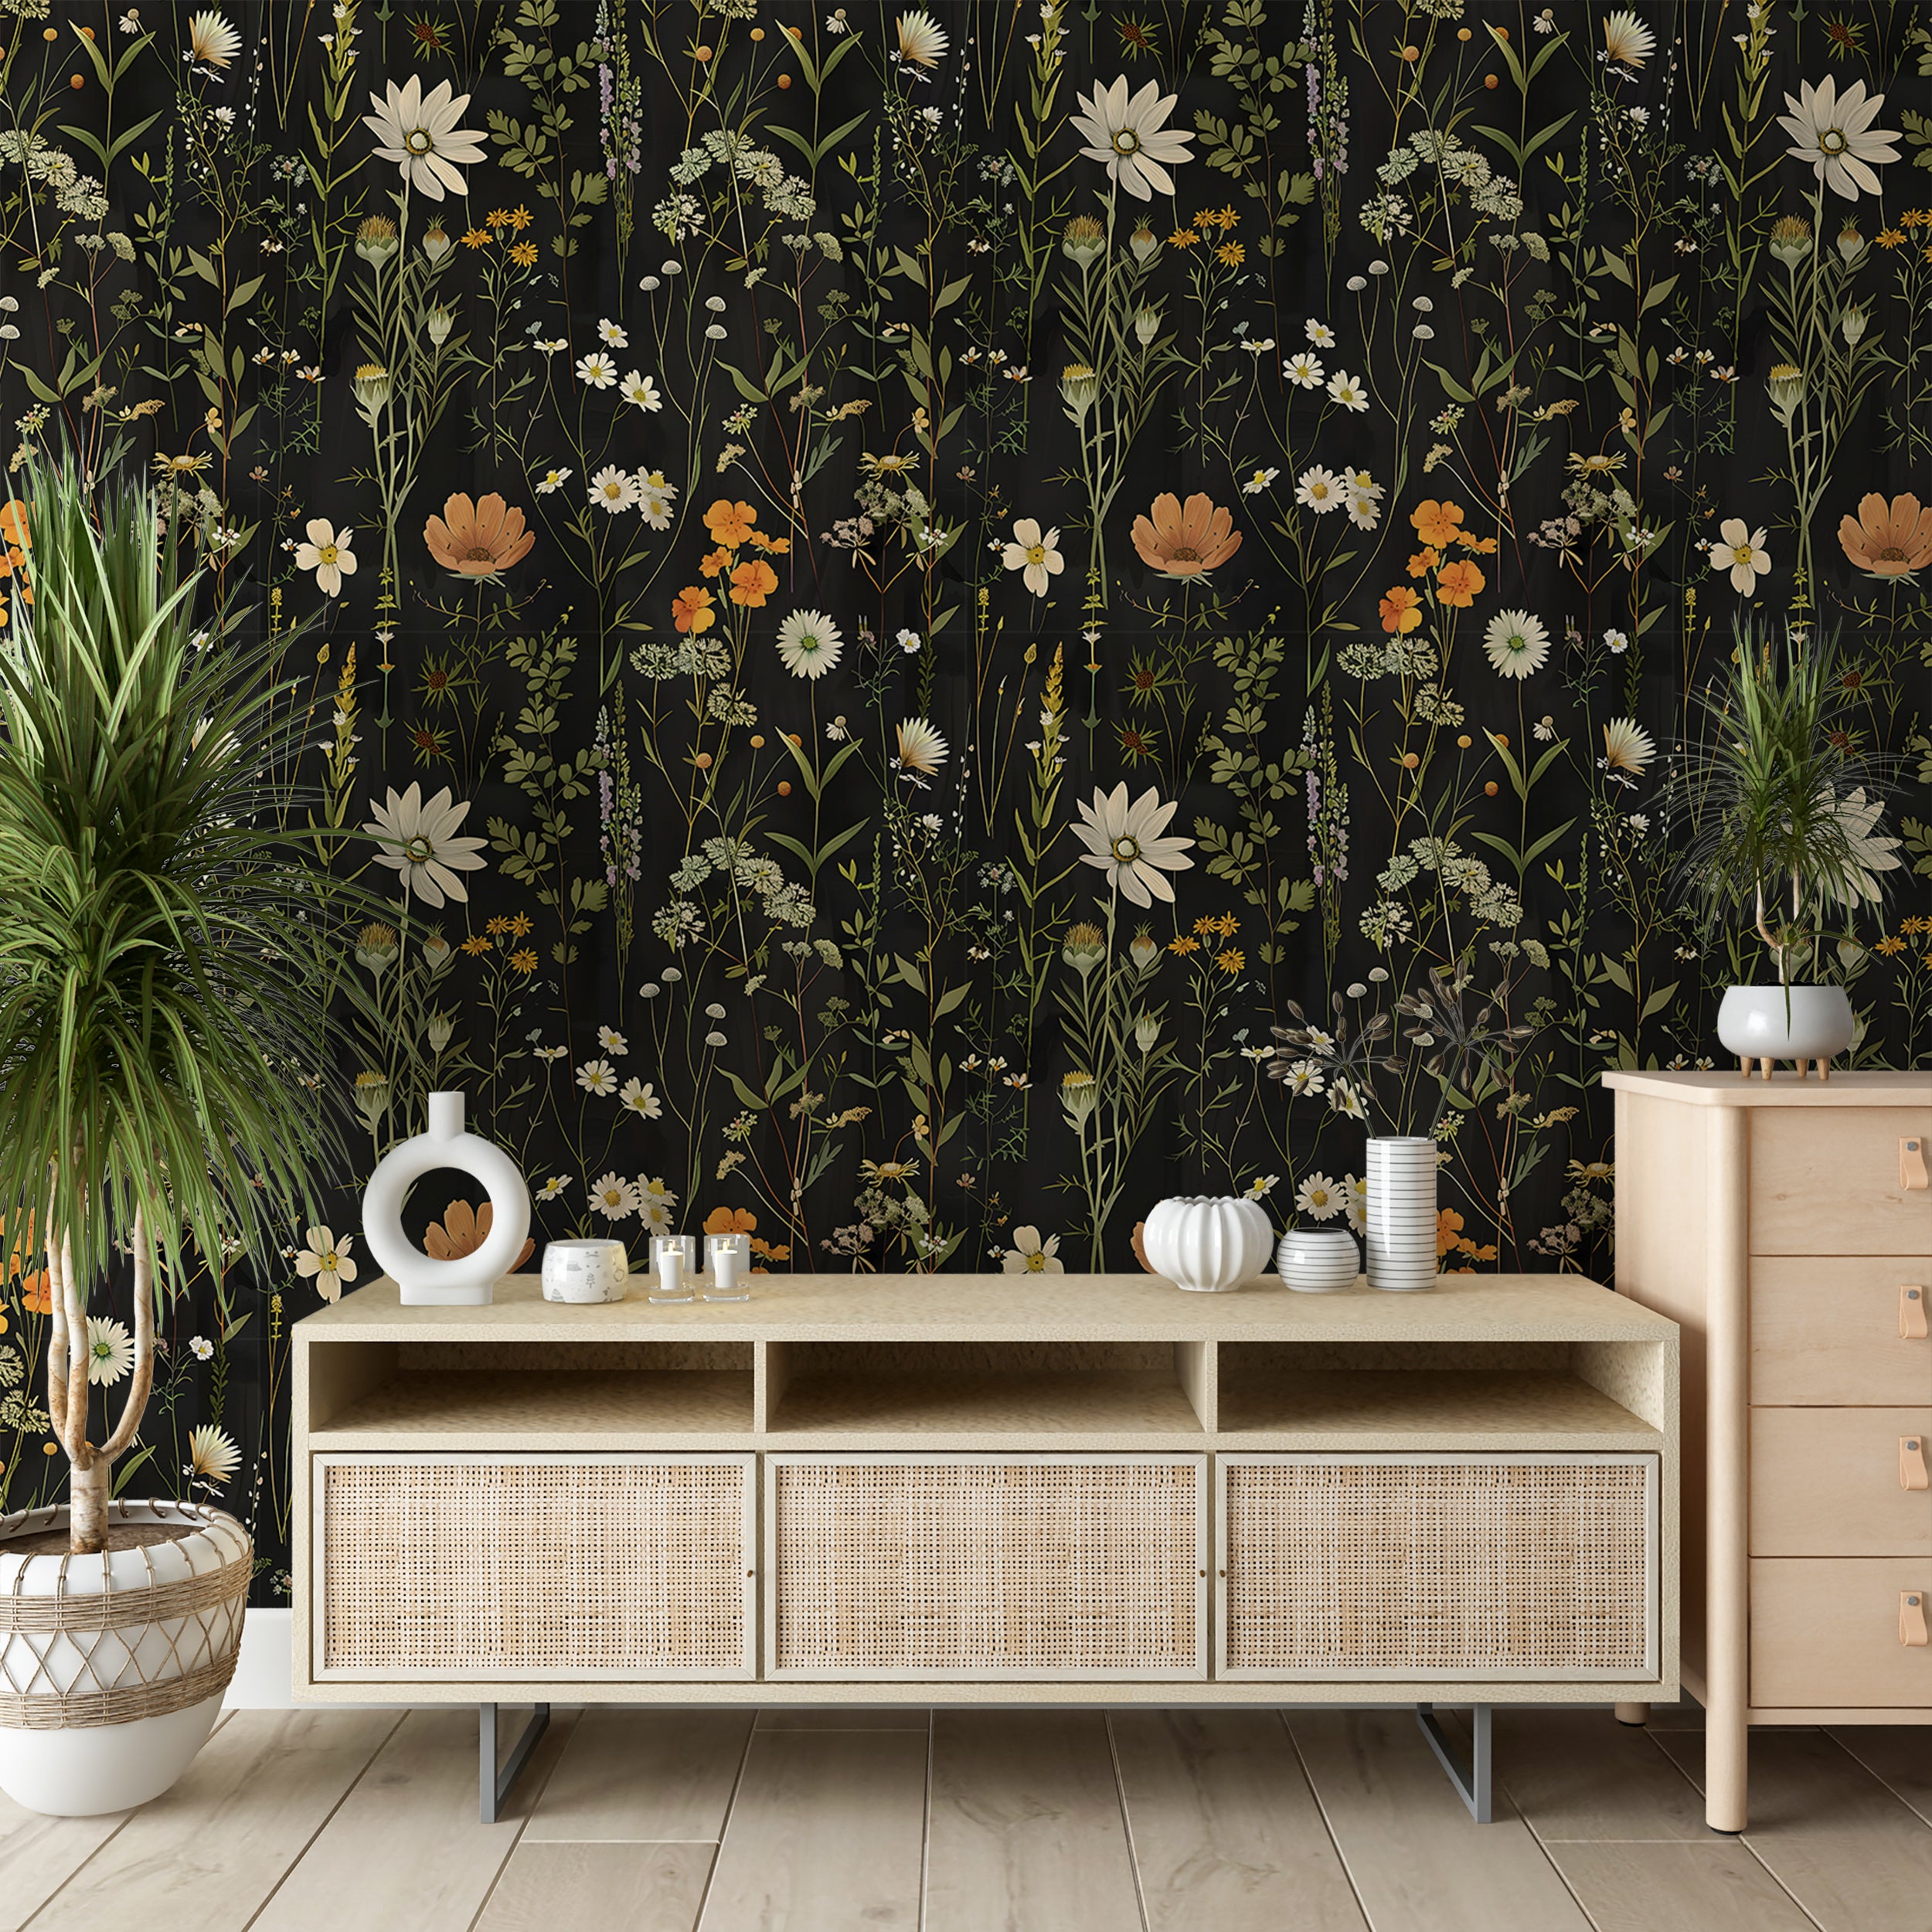 Meadow Flowers Wallpaper, Dark Botanical Decal, Peel and Stick Dark Floral, Vintage Flower Wallpaper, Removable Wild Flowers Black Background